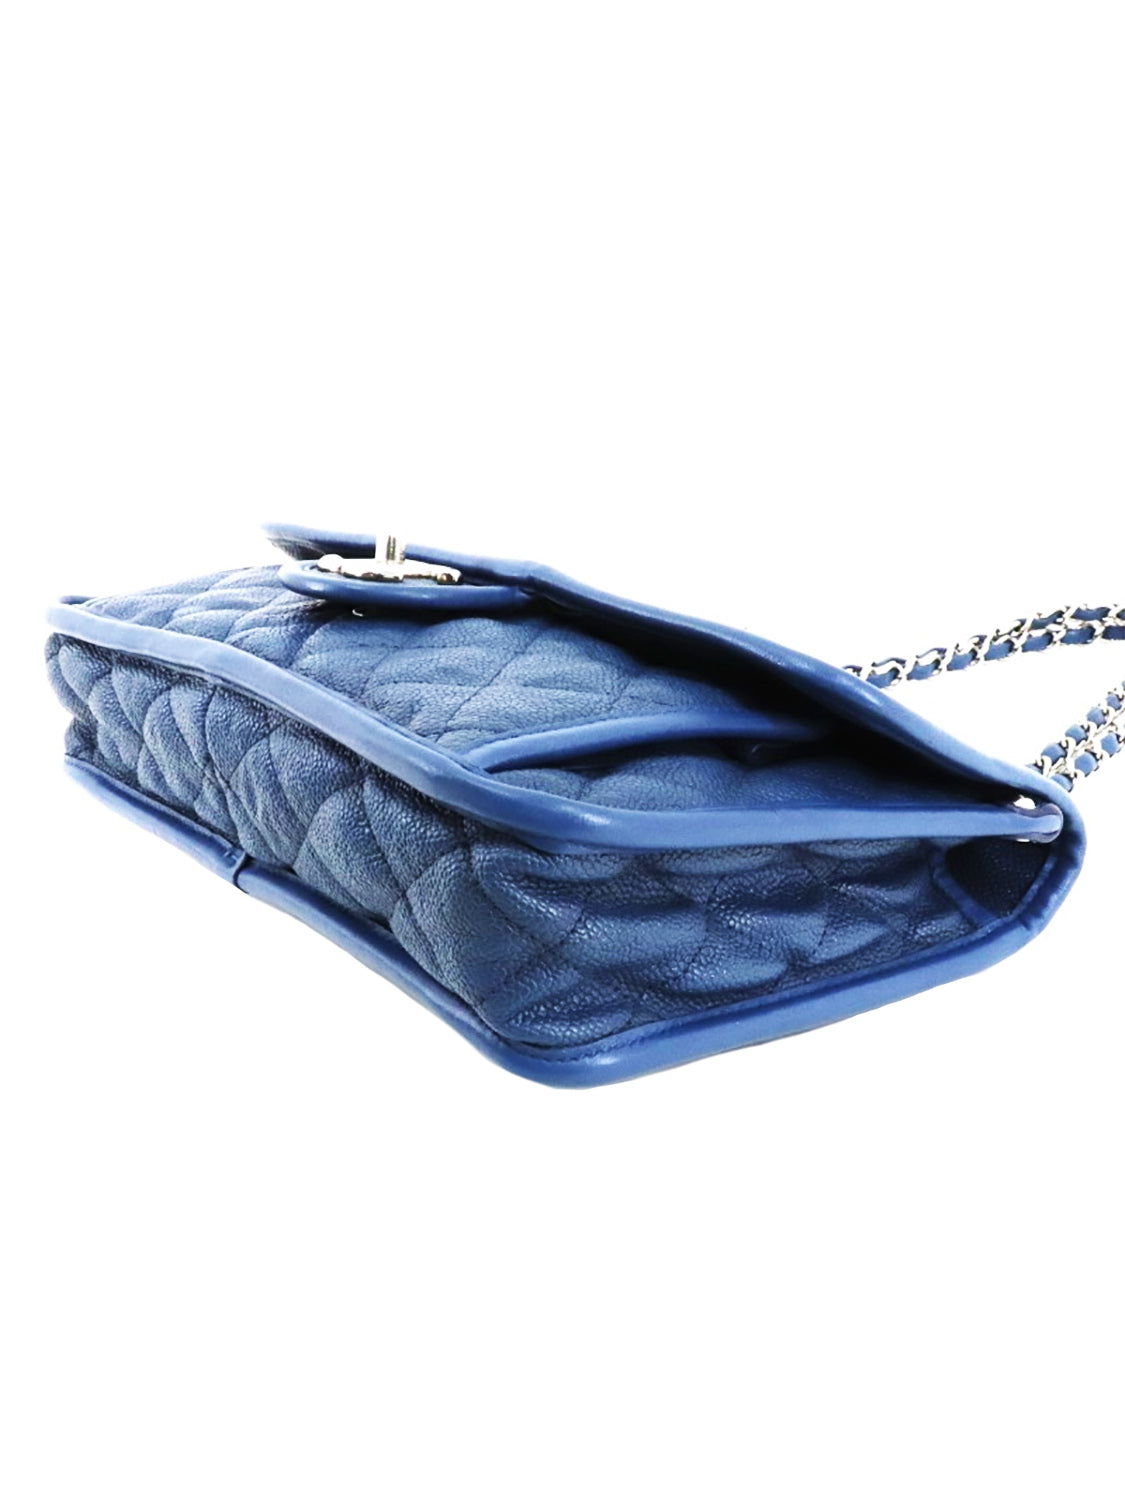 chanel blue leather bag